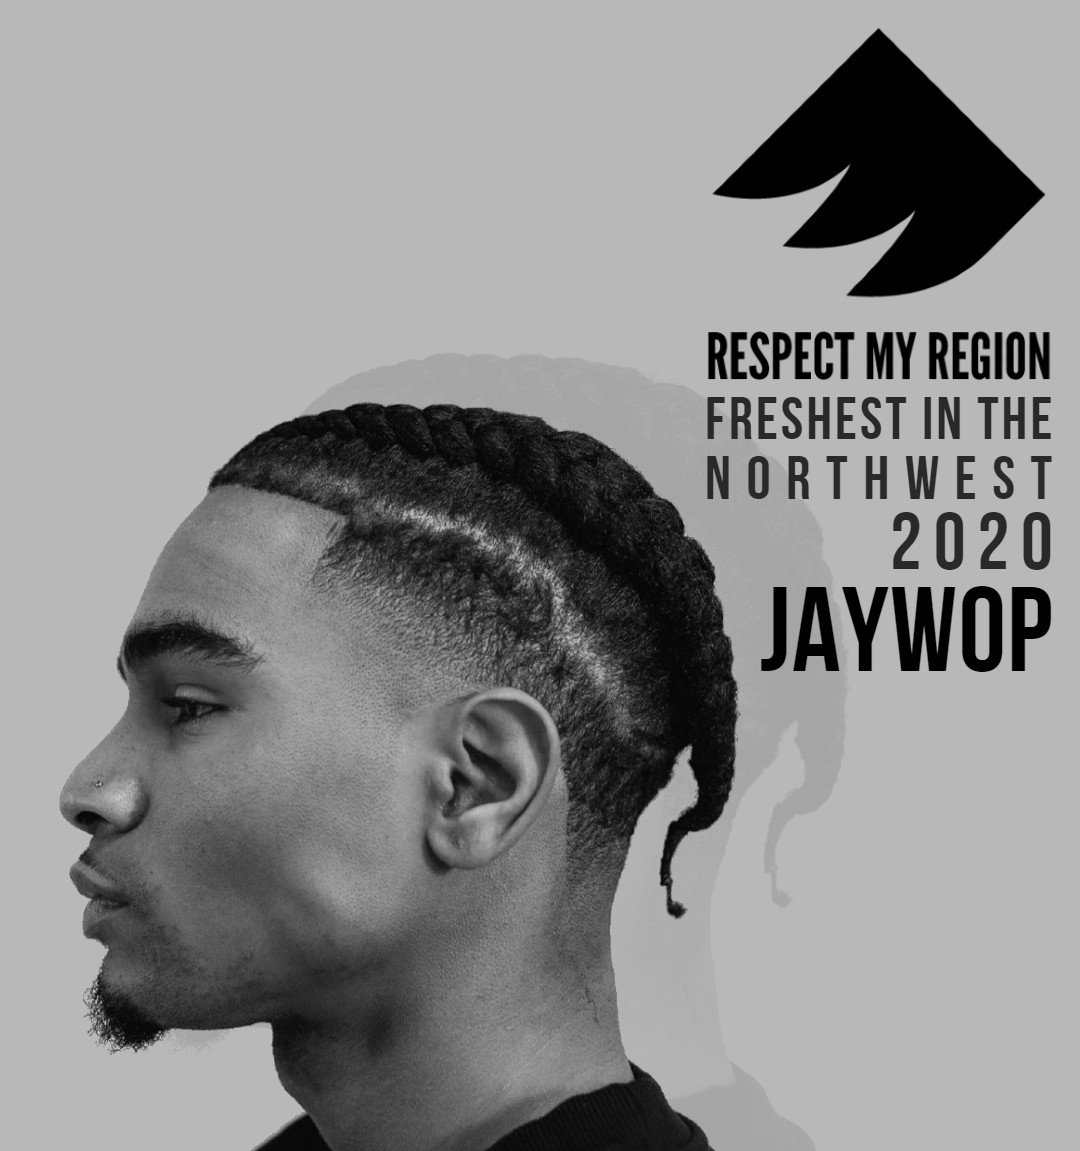 Freshest in the northwest rising artists 2020 jaywop